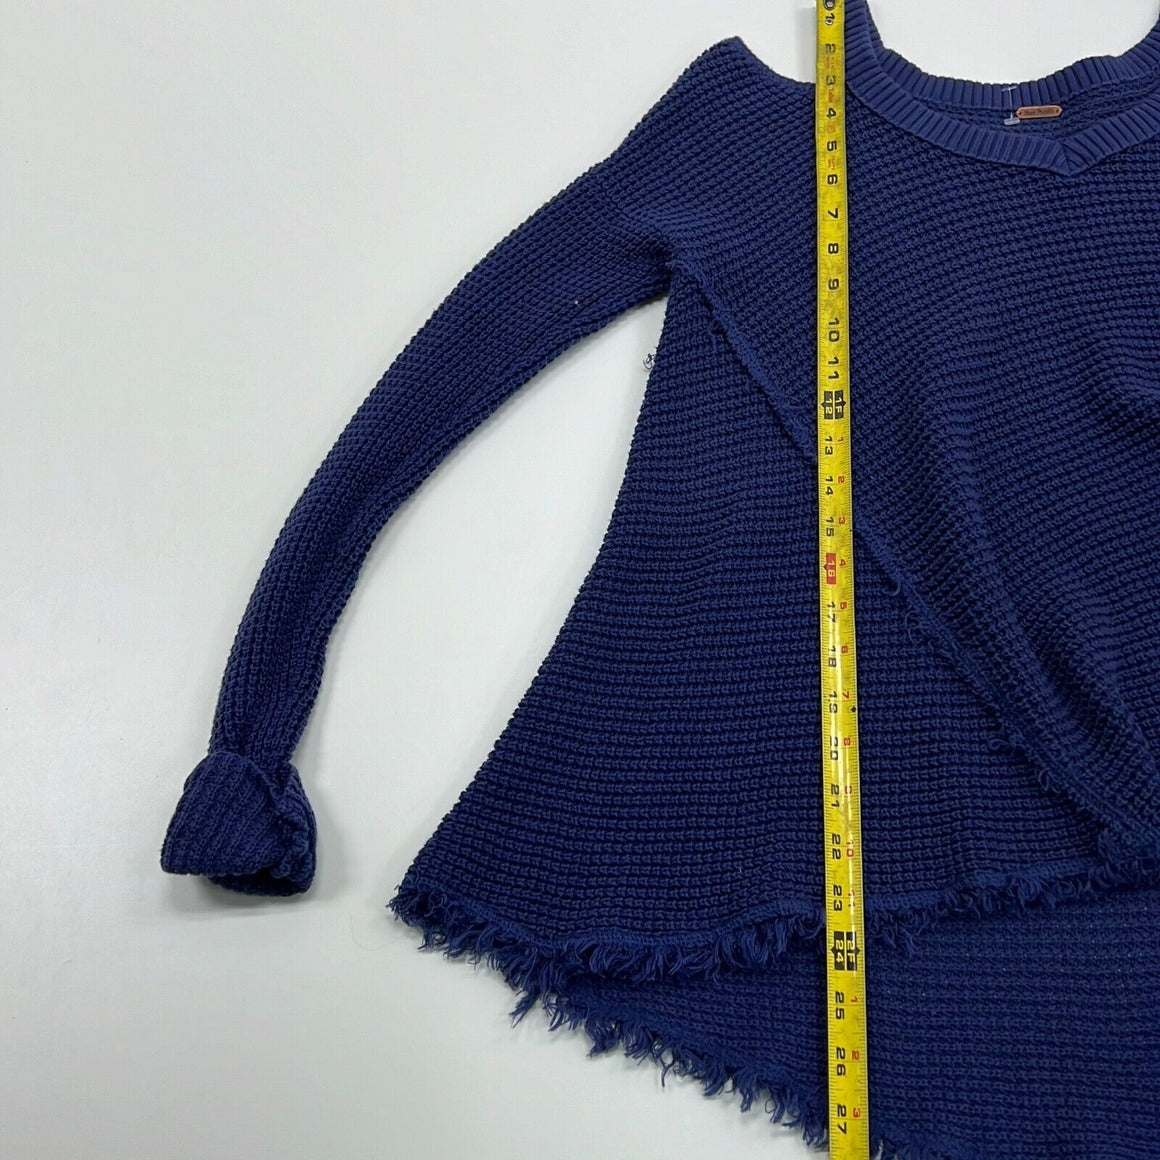 Free People Fall 2015 Knit Sweaters